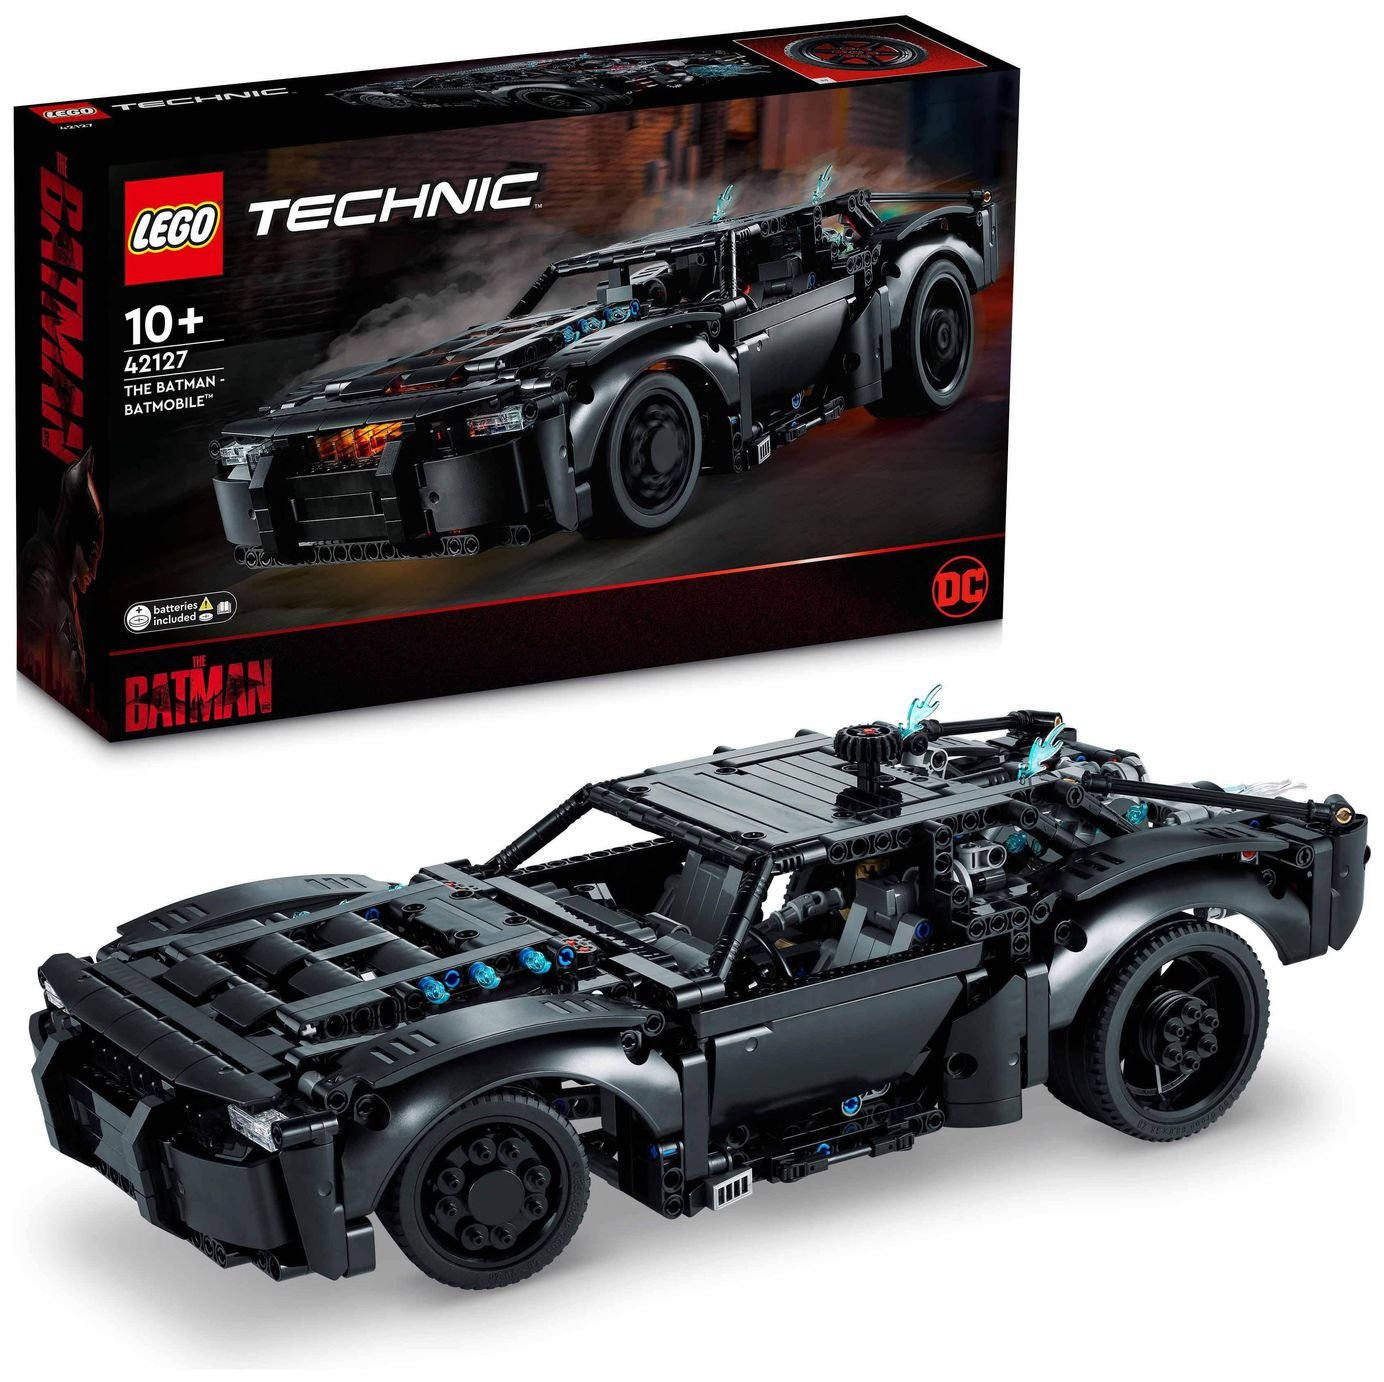 LEGO Technic THE BATMAN – BATMOBILE Buildable Car Toy 42127